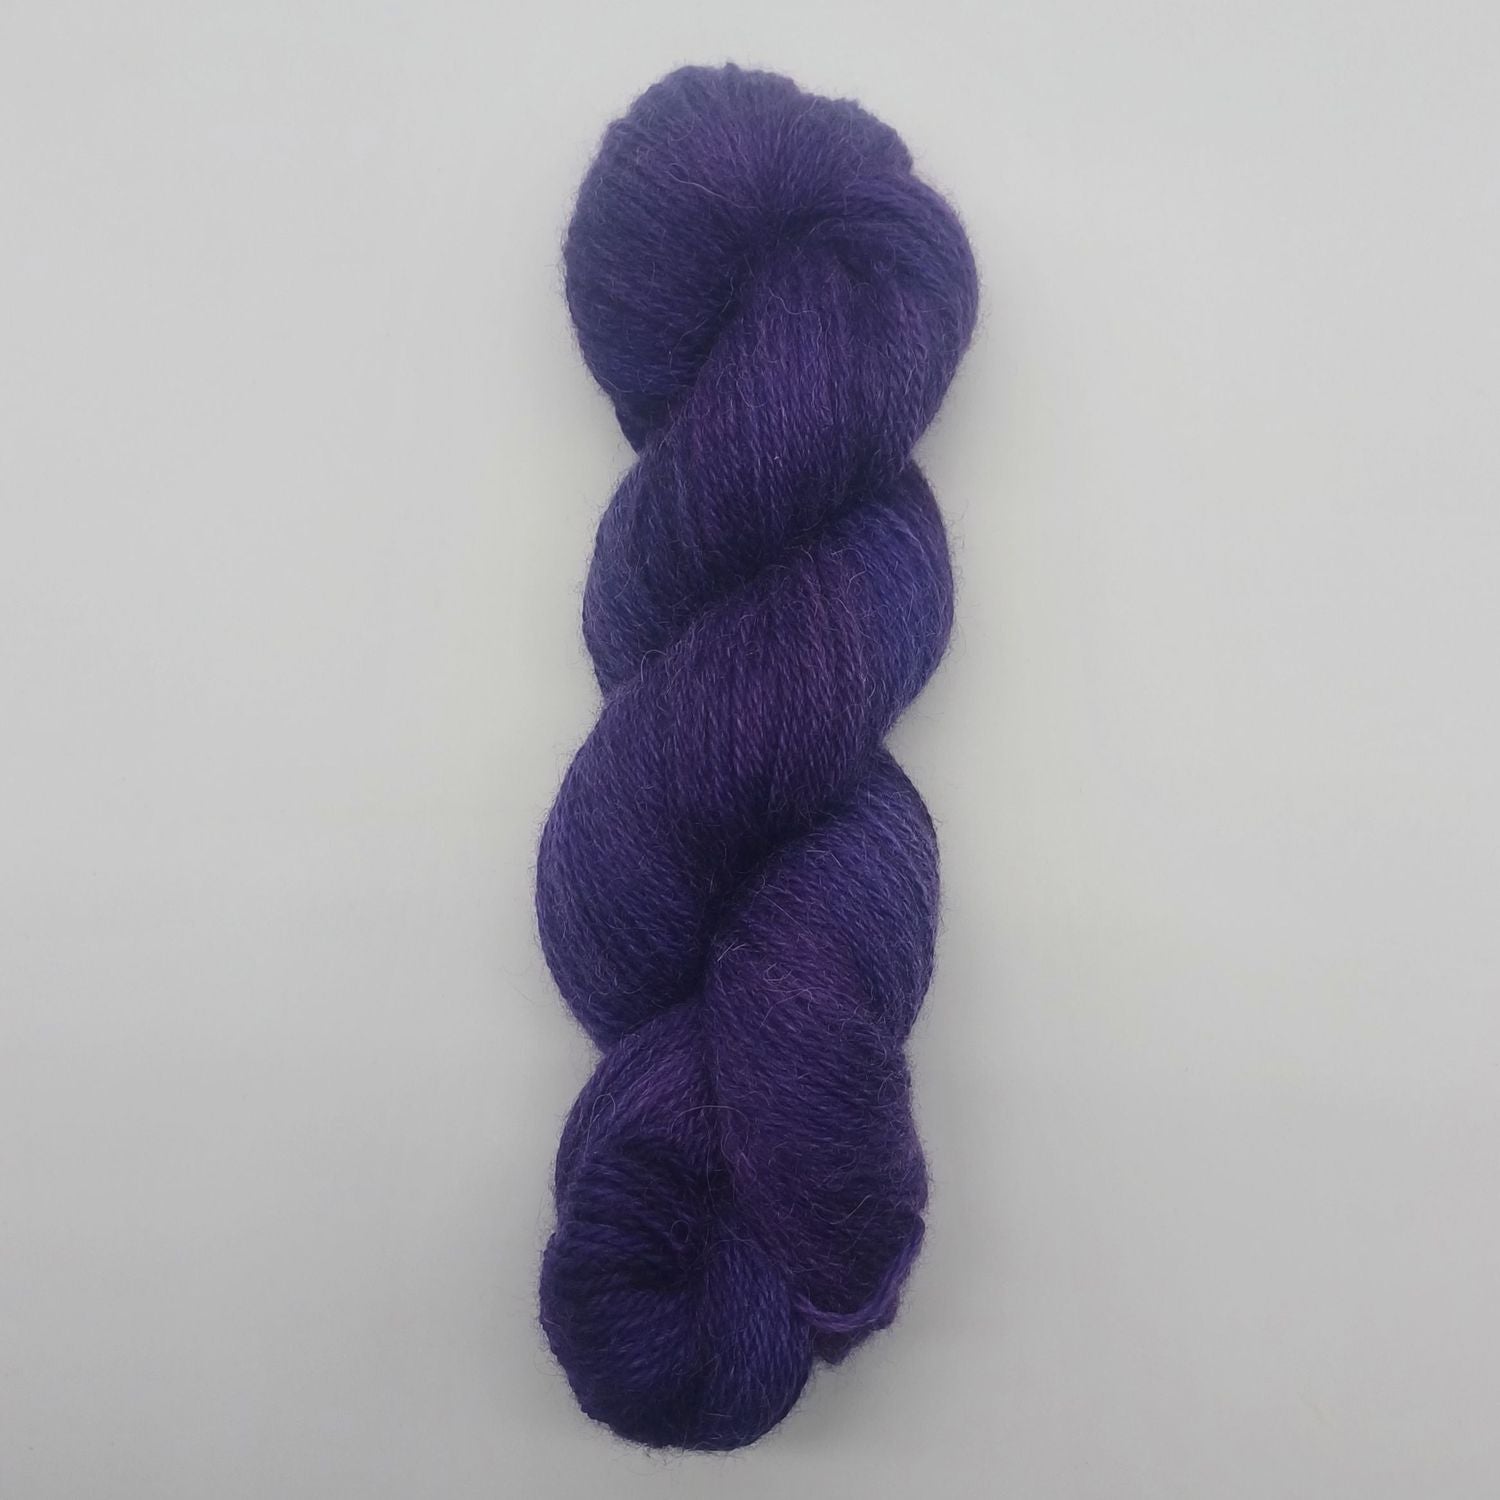 Yarn made from Alpaca Fibre